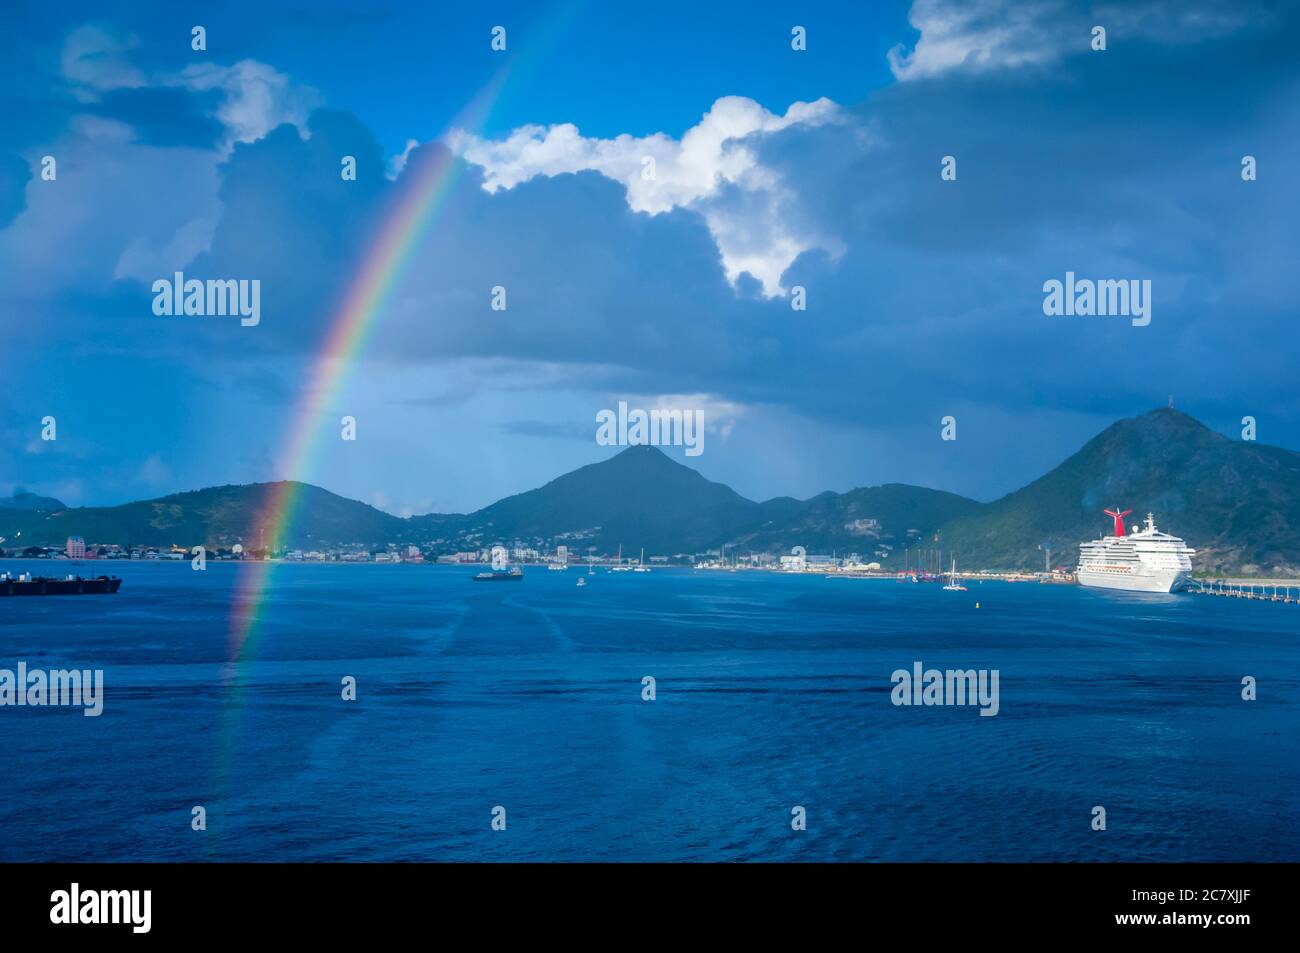 Storm clouds and rainbow near St. Maarten, Caribbean Islands. Stock Photo